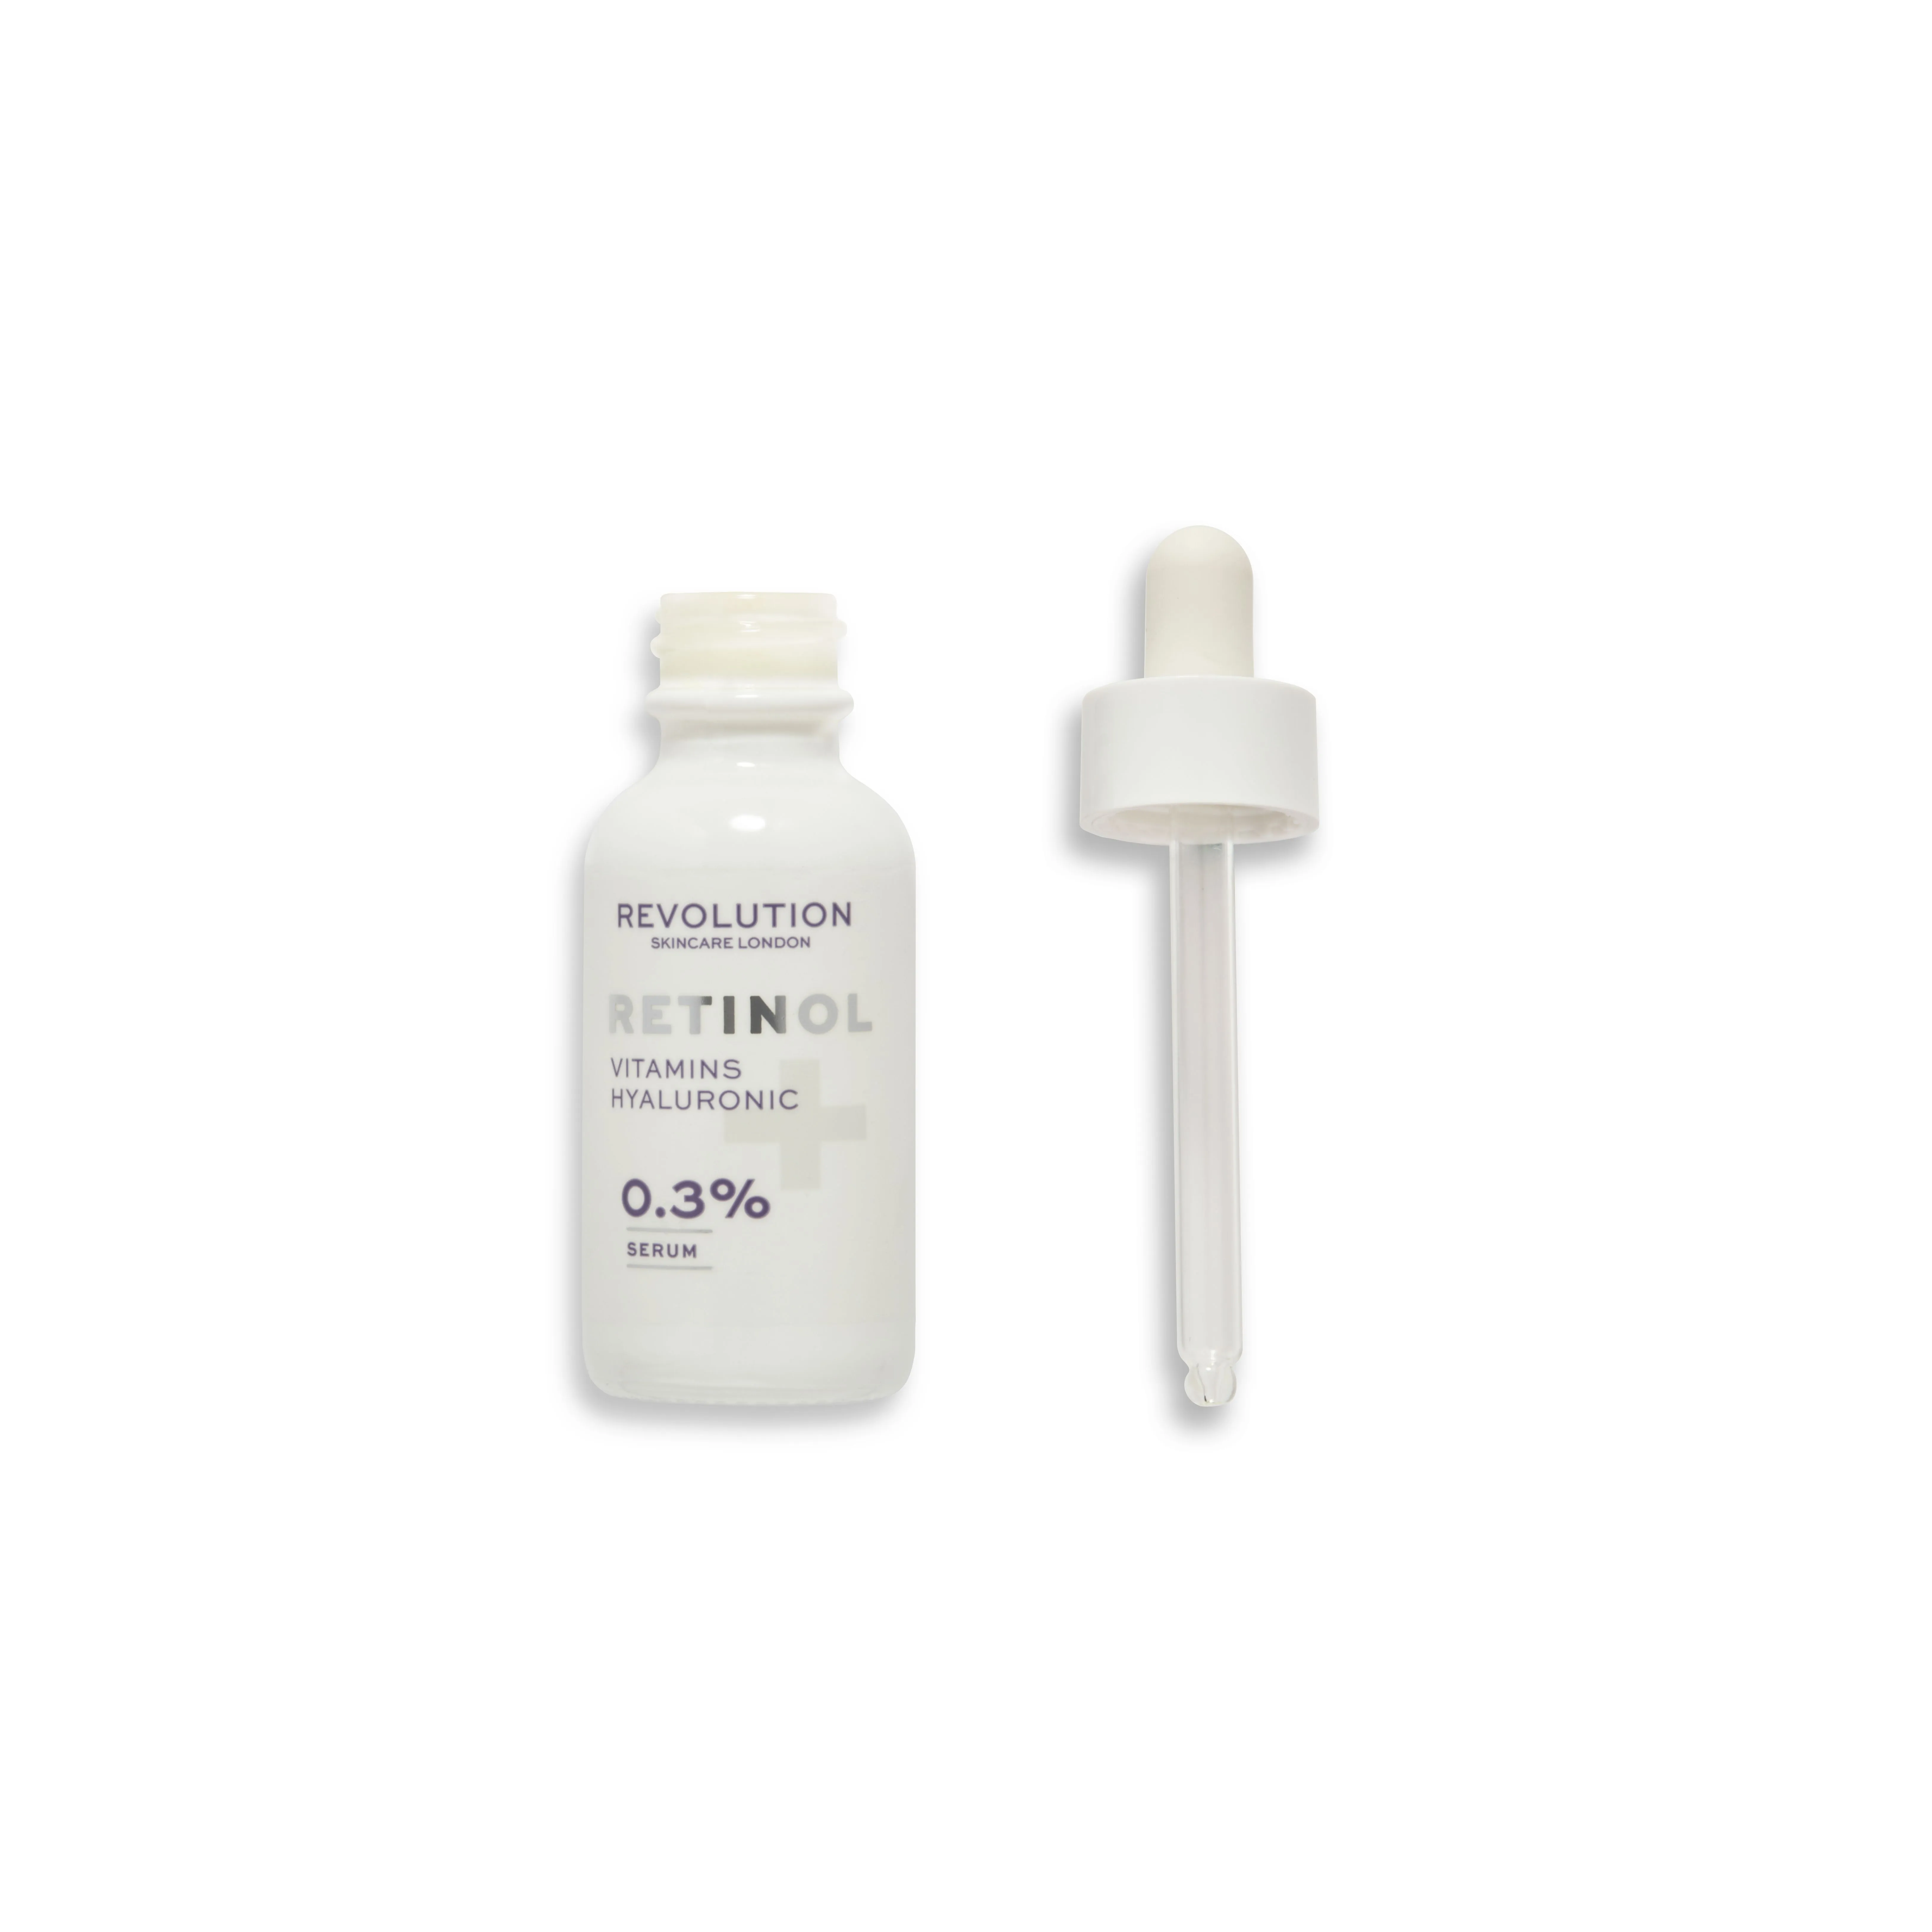 Revolution Skincare 0.3% Retinol with Vitamins & Hyaluronic Acid sérum